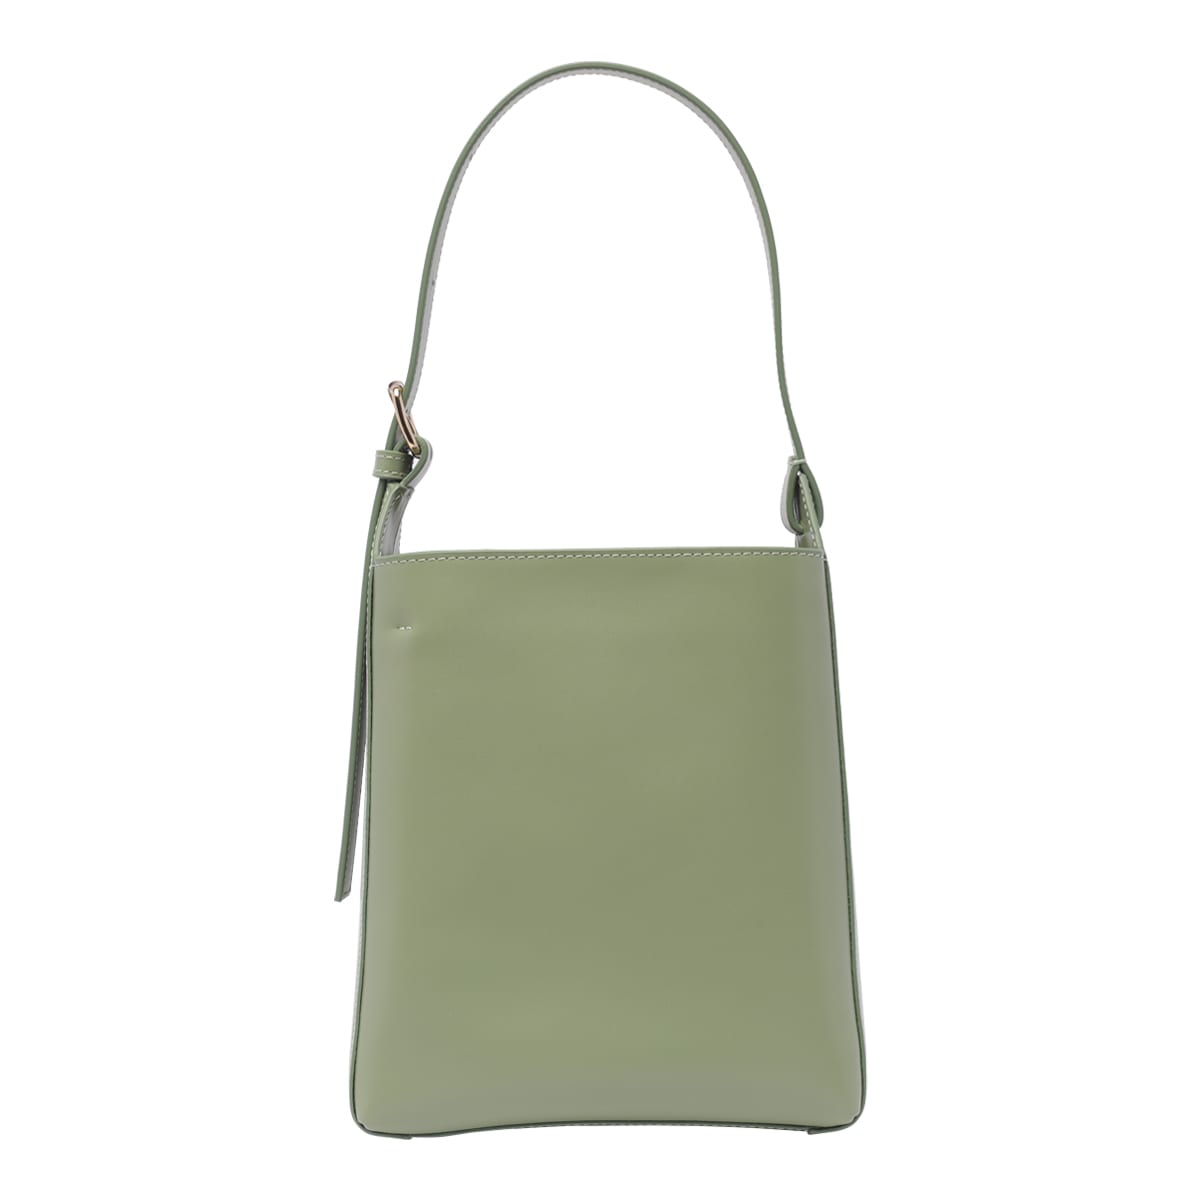 Apc Sac Small Virginie Shoulder Bag In Green